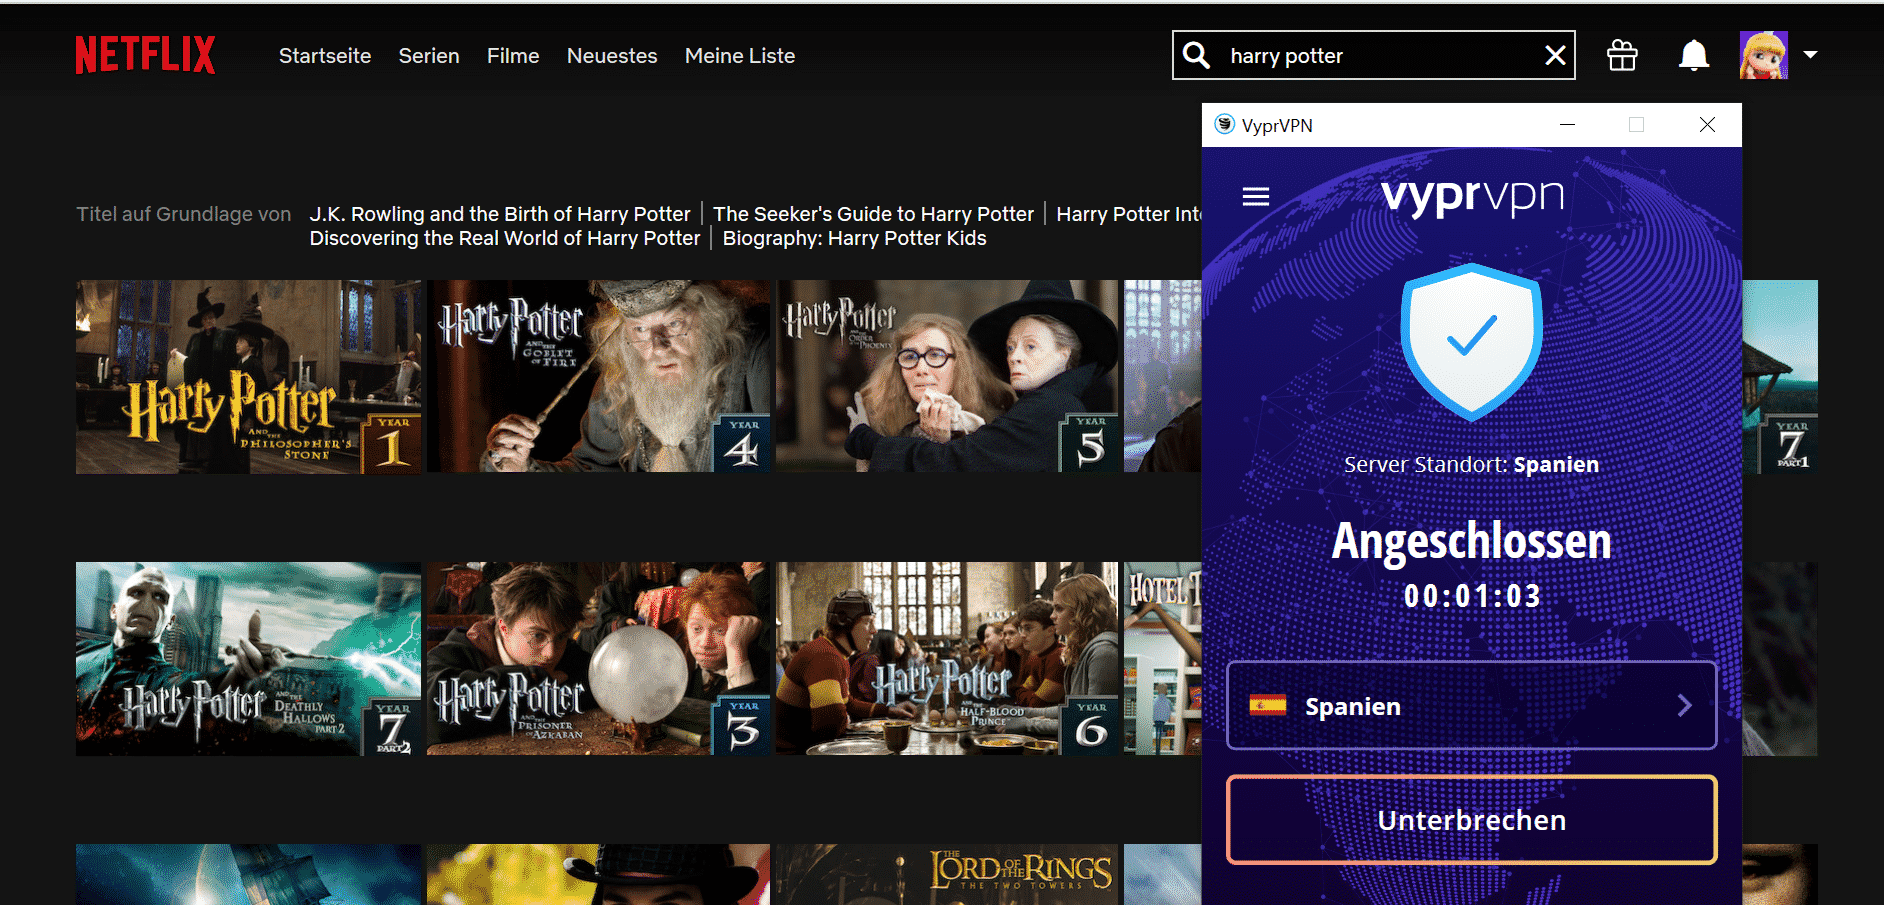 Harry Potter Netflix 2021 Alle 8 Filme Kostenlos Streamen